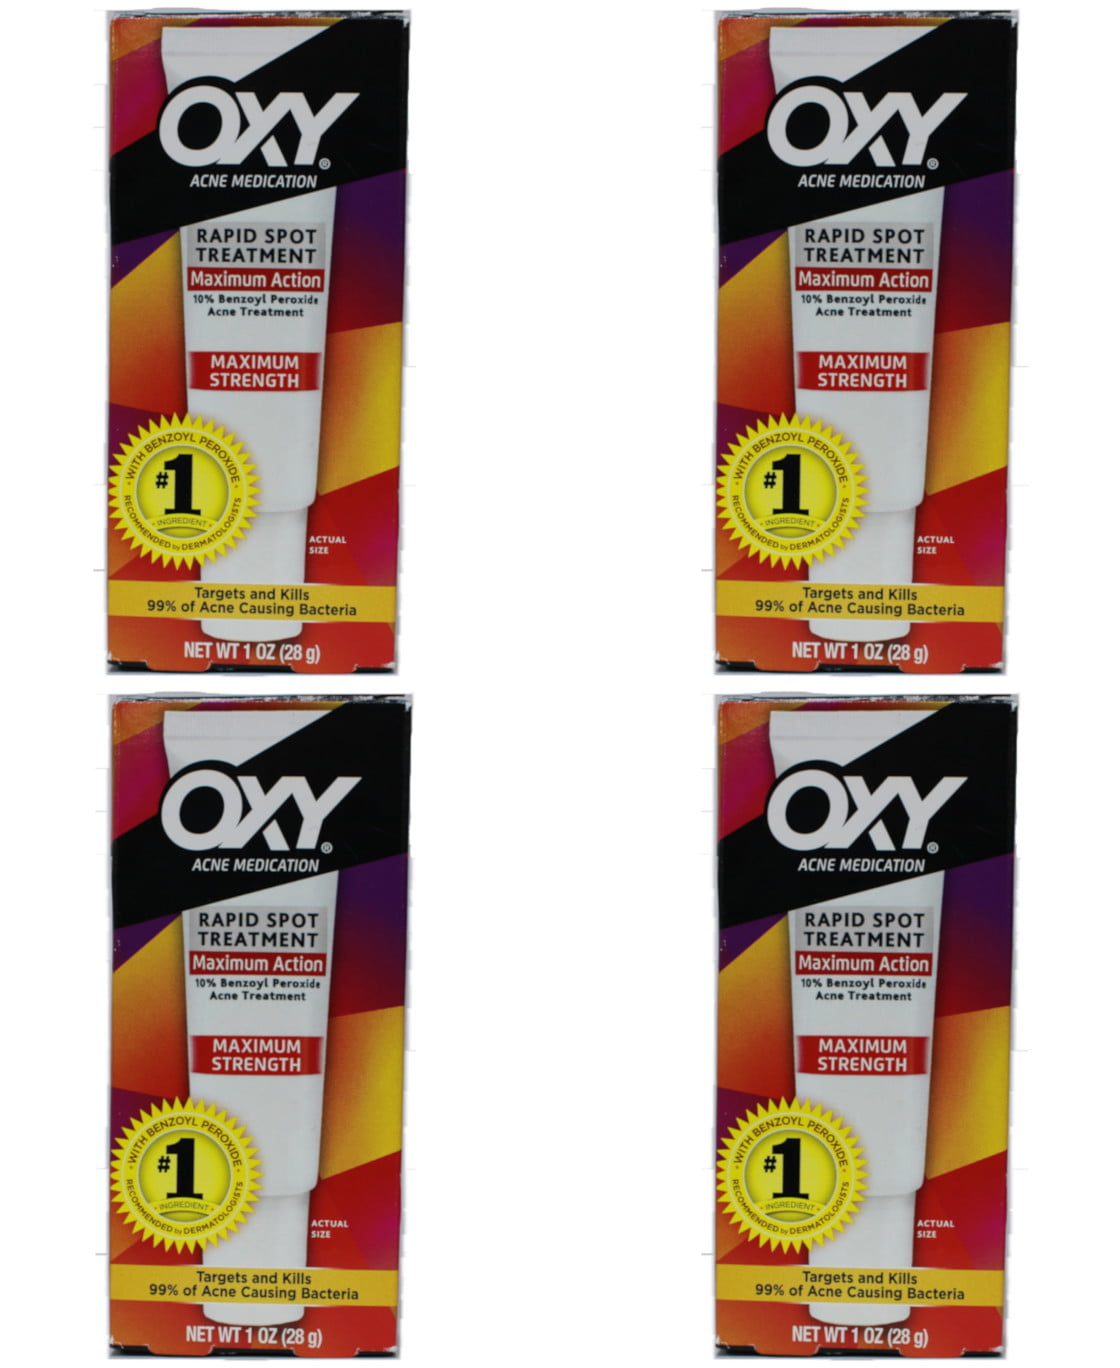 oxy maximum action spot treatment directions